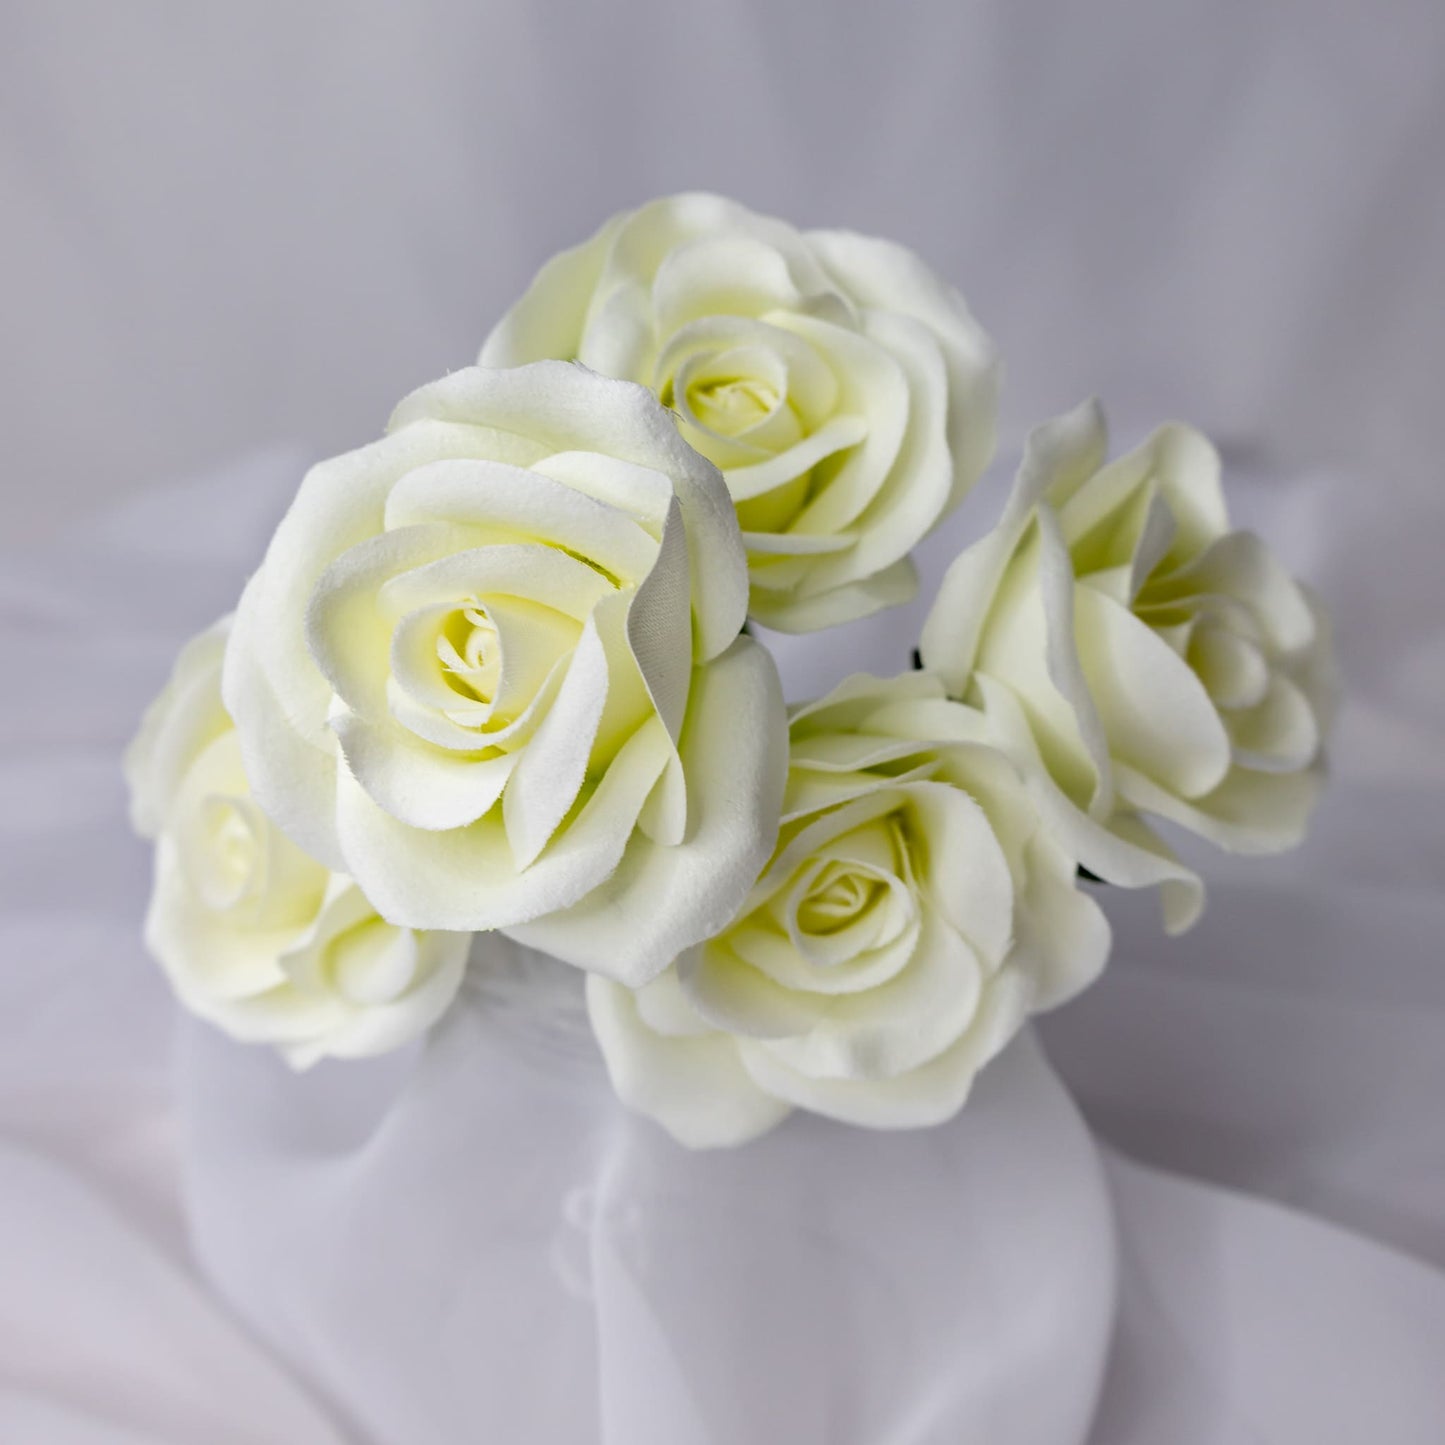 artificial white velveeten roses top view